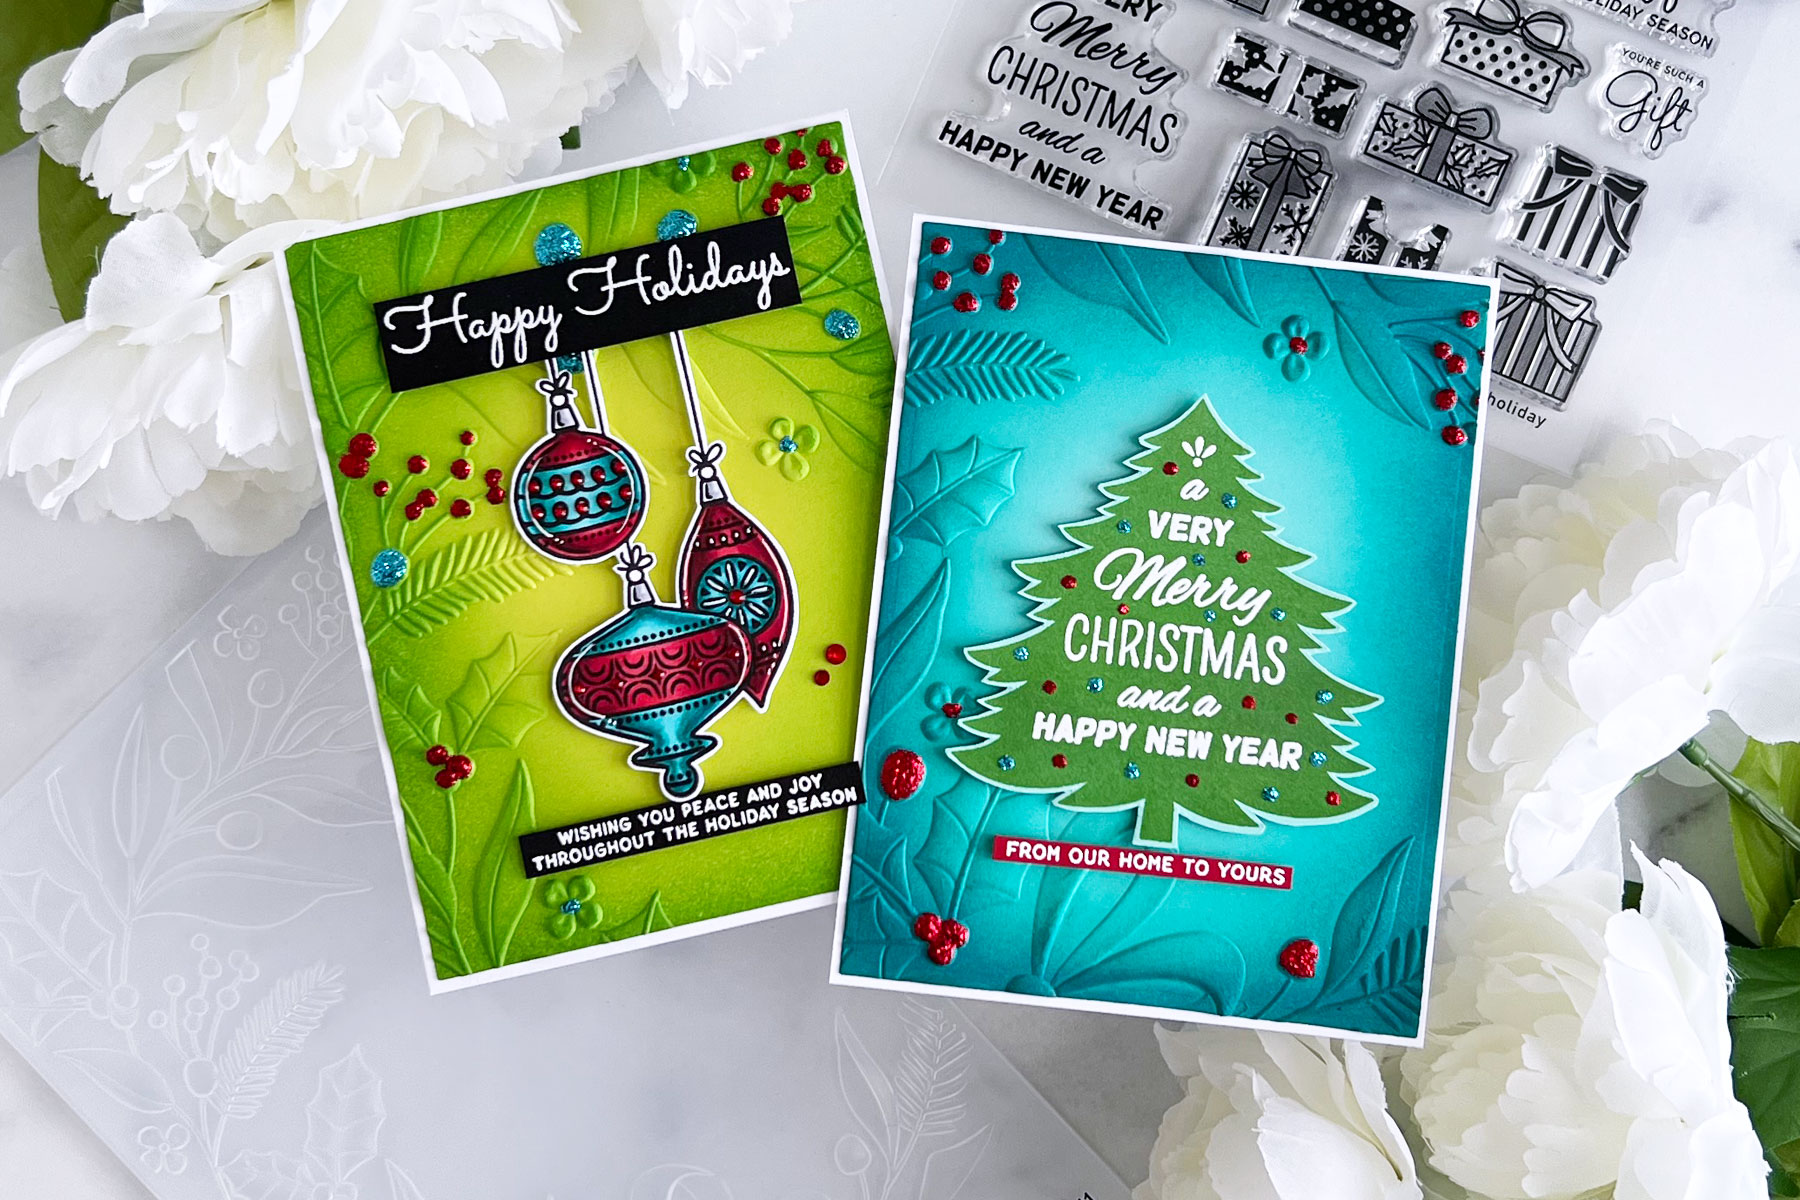 Holiday Card Series 2021 - Day 1 Gina K Designs - Got Joy Creations